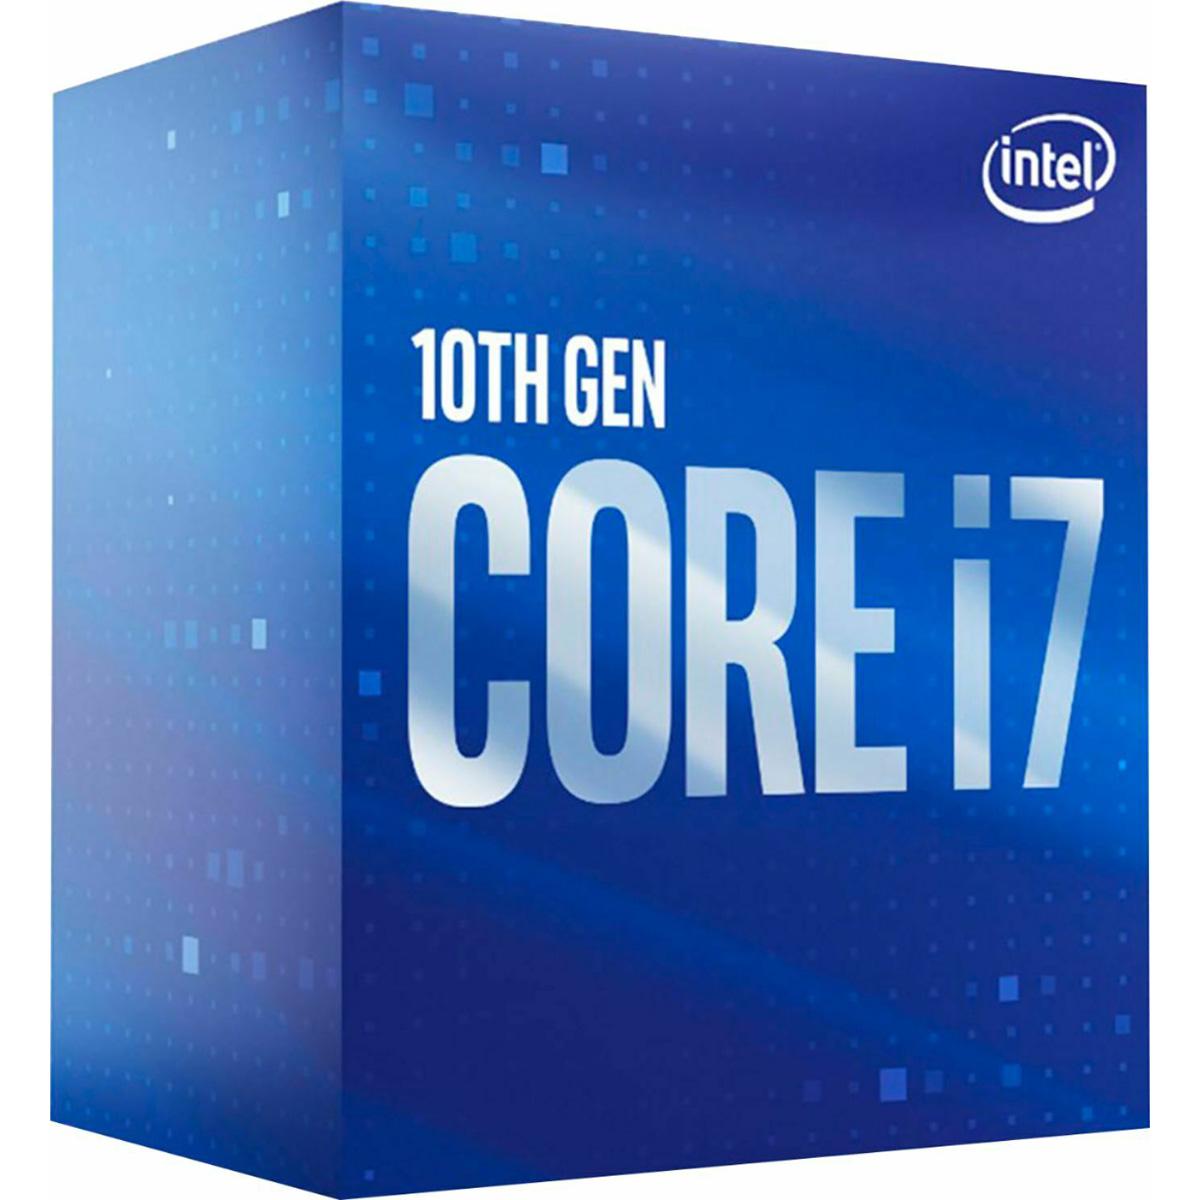 Intel Core i7-10700 8-Core Locked Desktop Processor for $294.99 Shipped